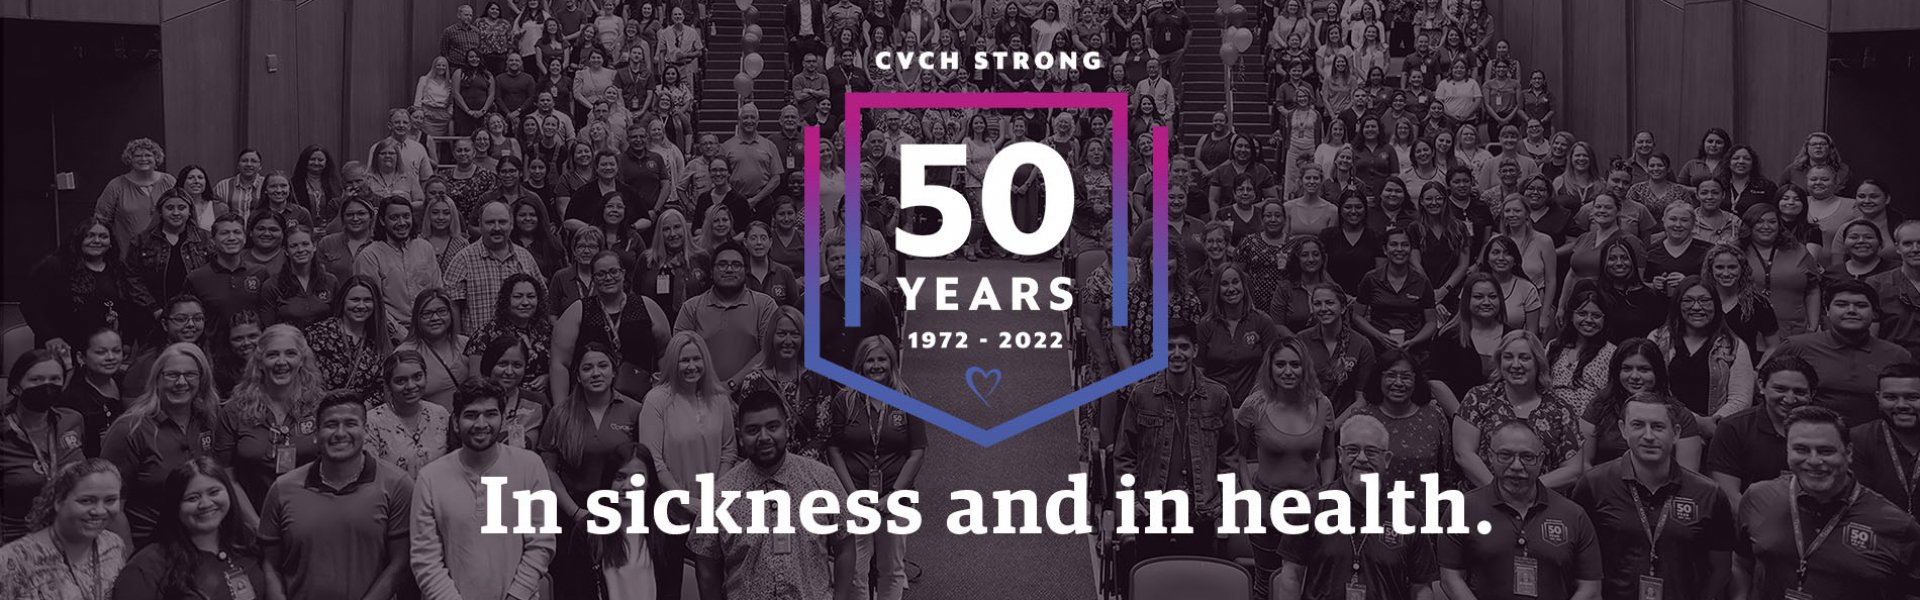 CVCH 50th Anniversary